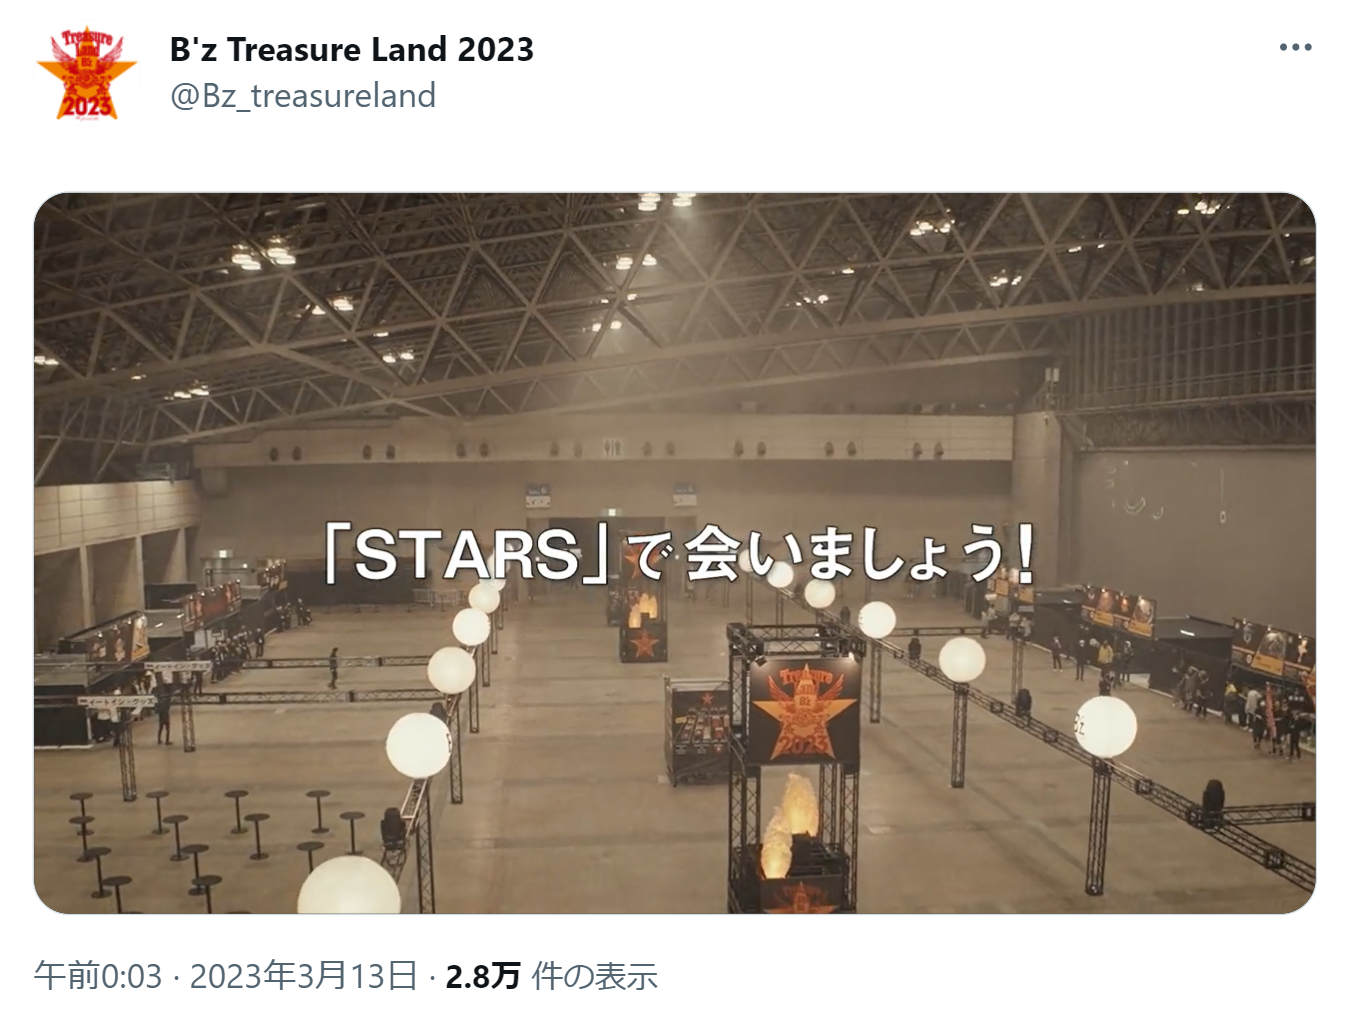 『B’z presents -Treasure Land 2023-』撤収時の様子を撮影した映像